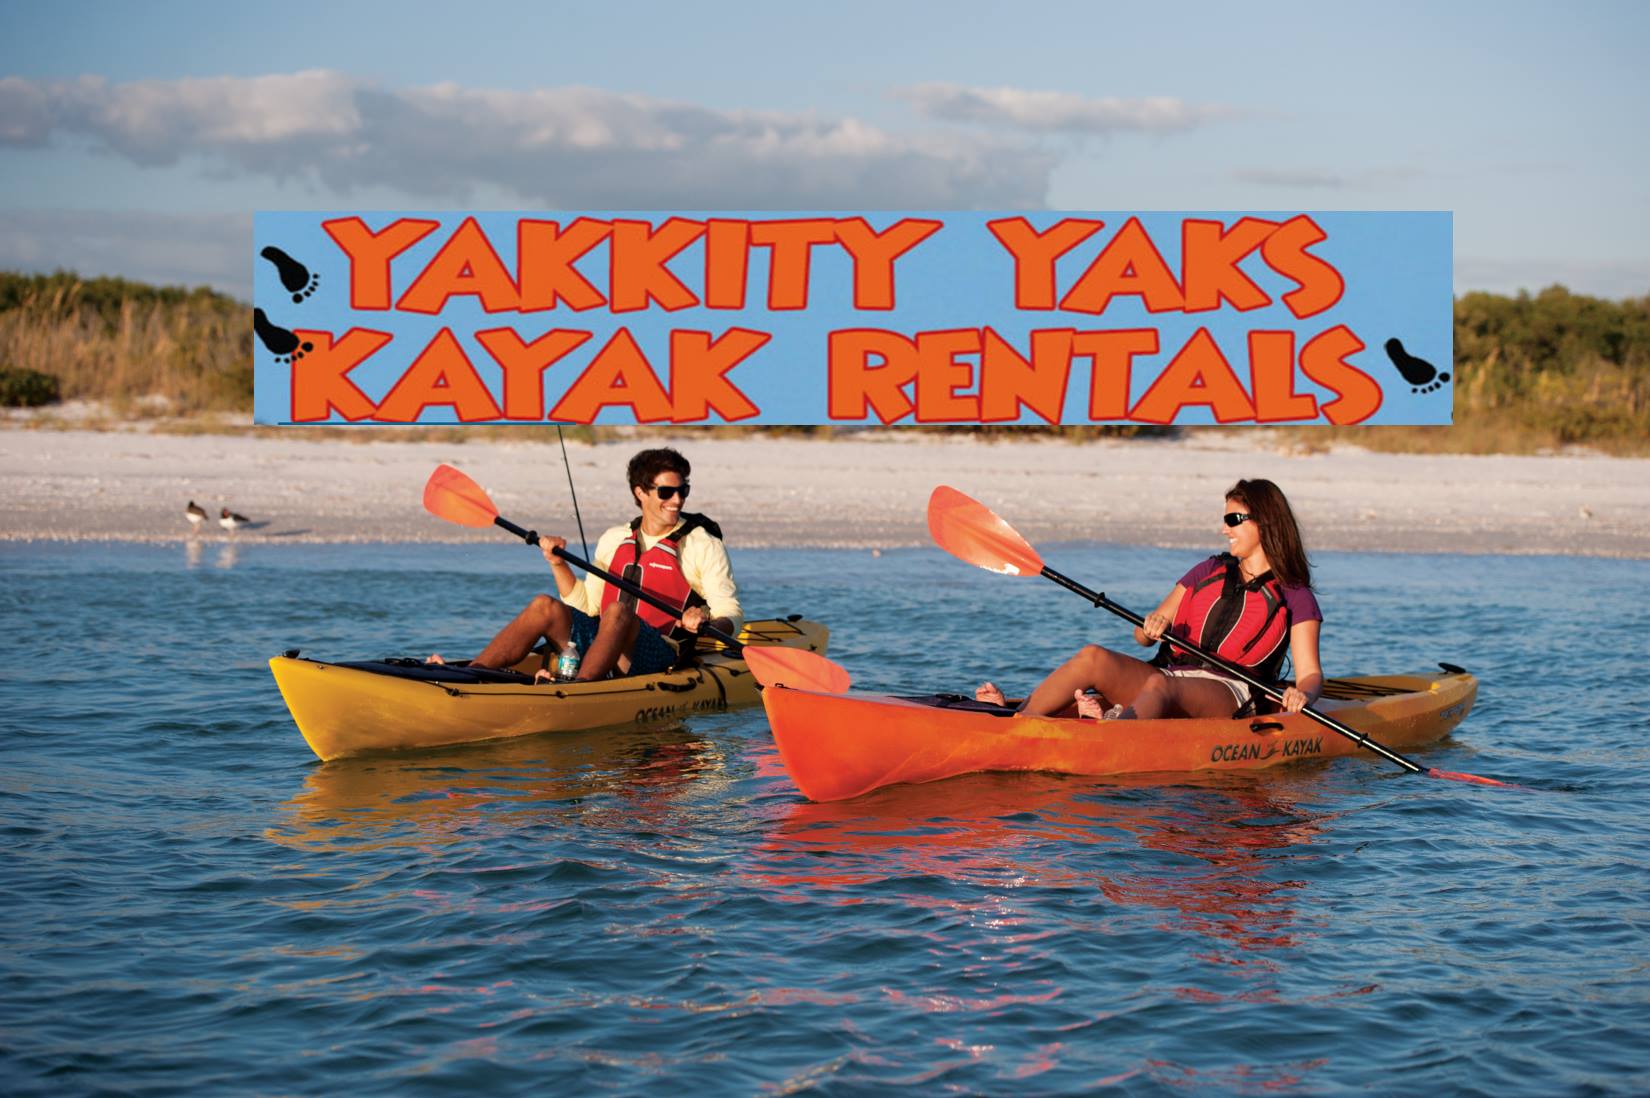 Yakkity Yaks Kayak Rental